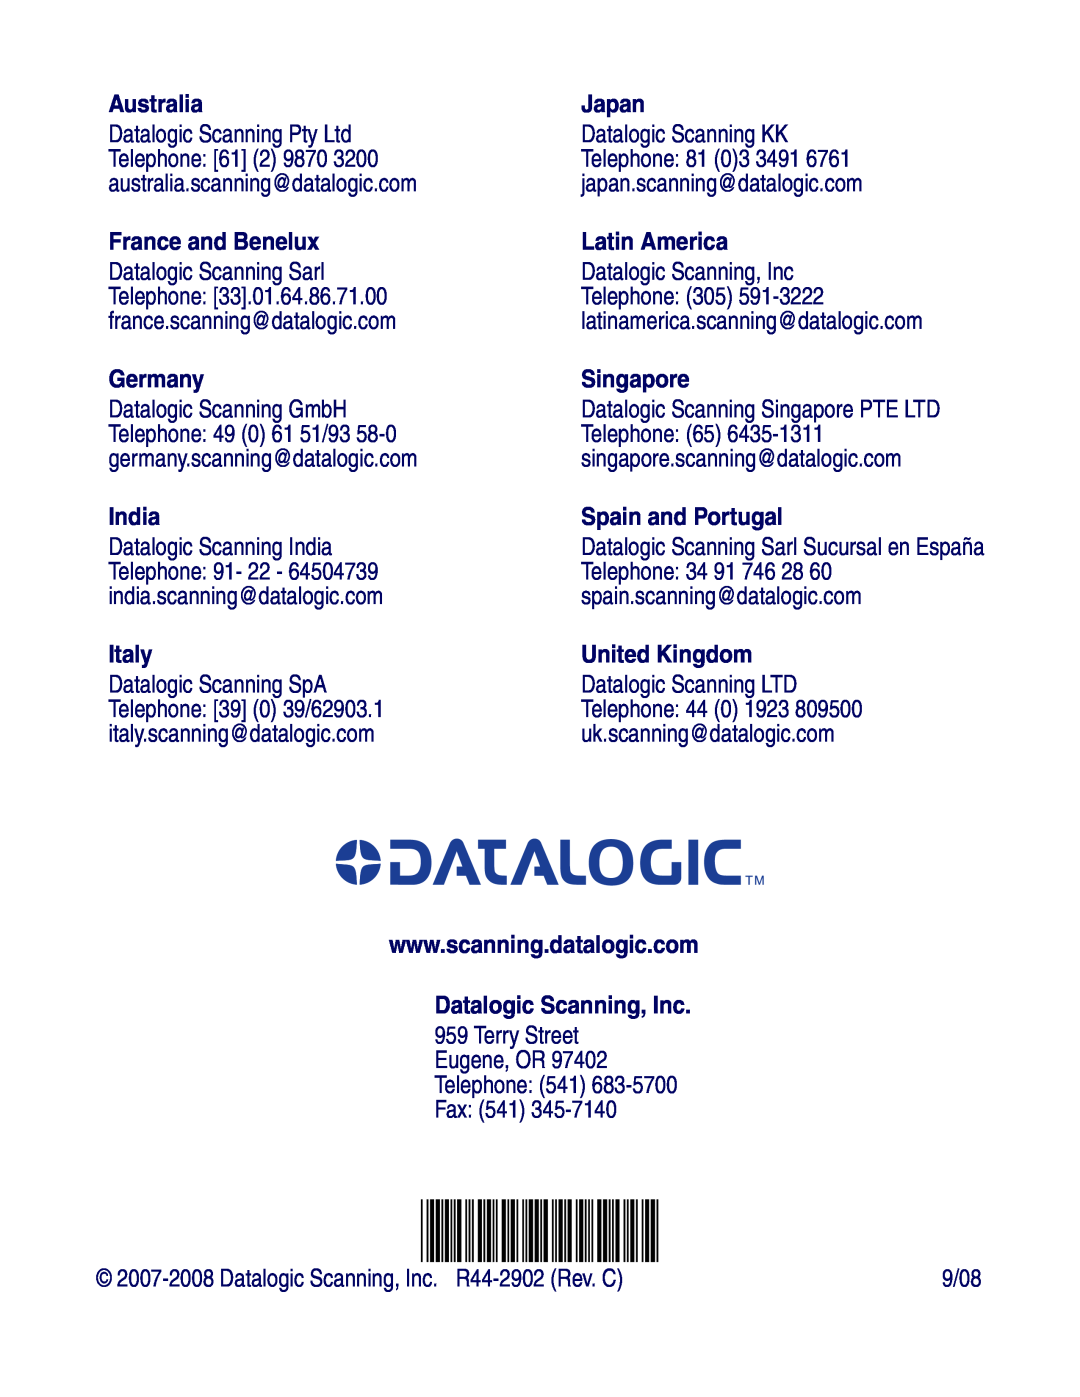 Datalogic Scanning QD 2300 manual Australia 